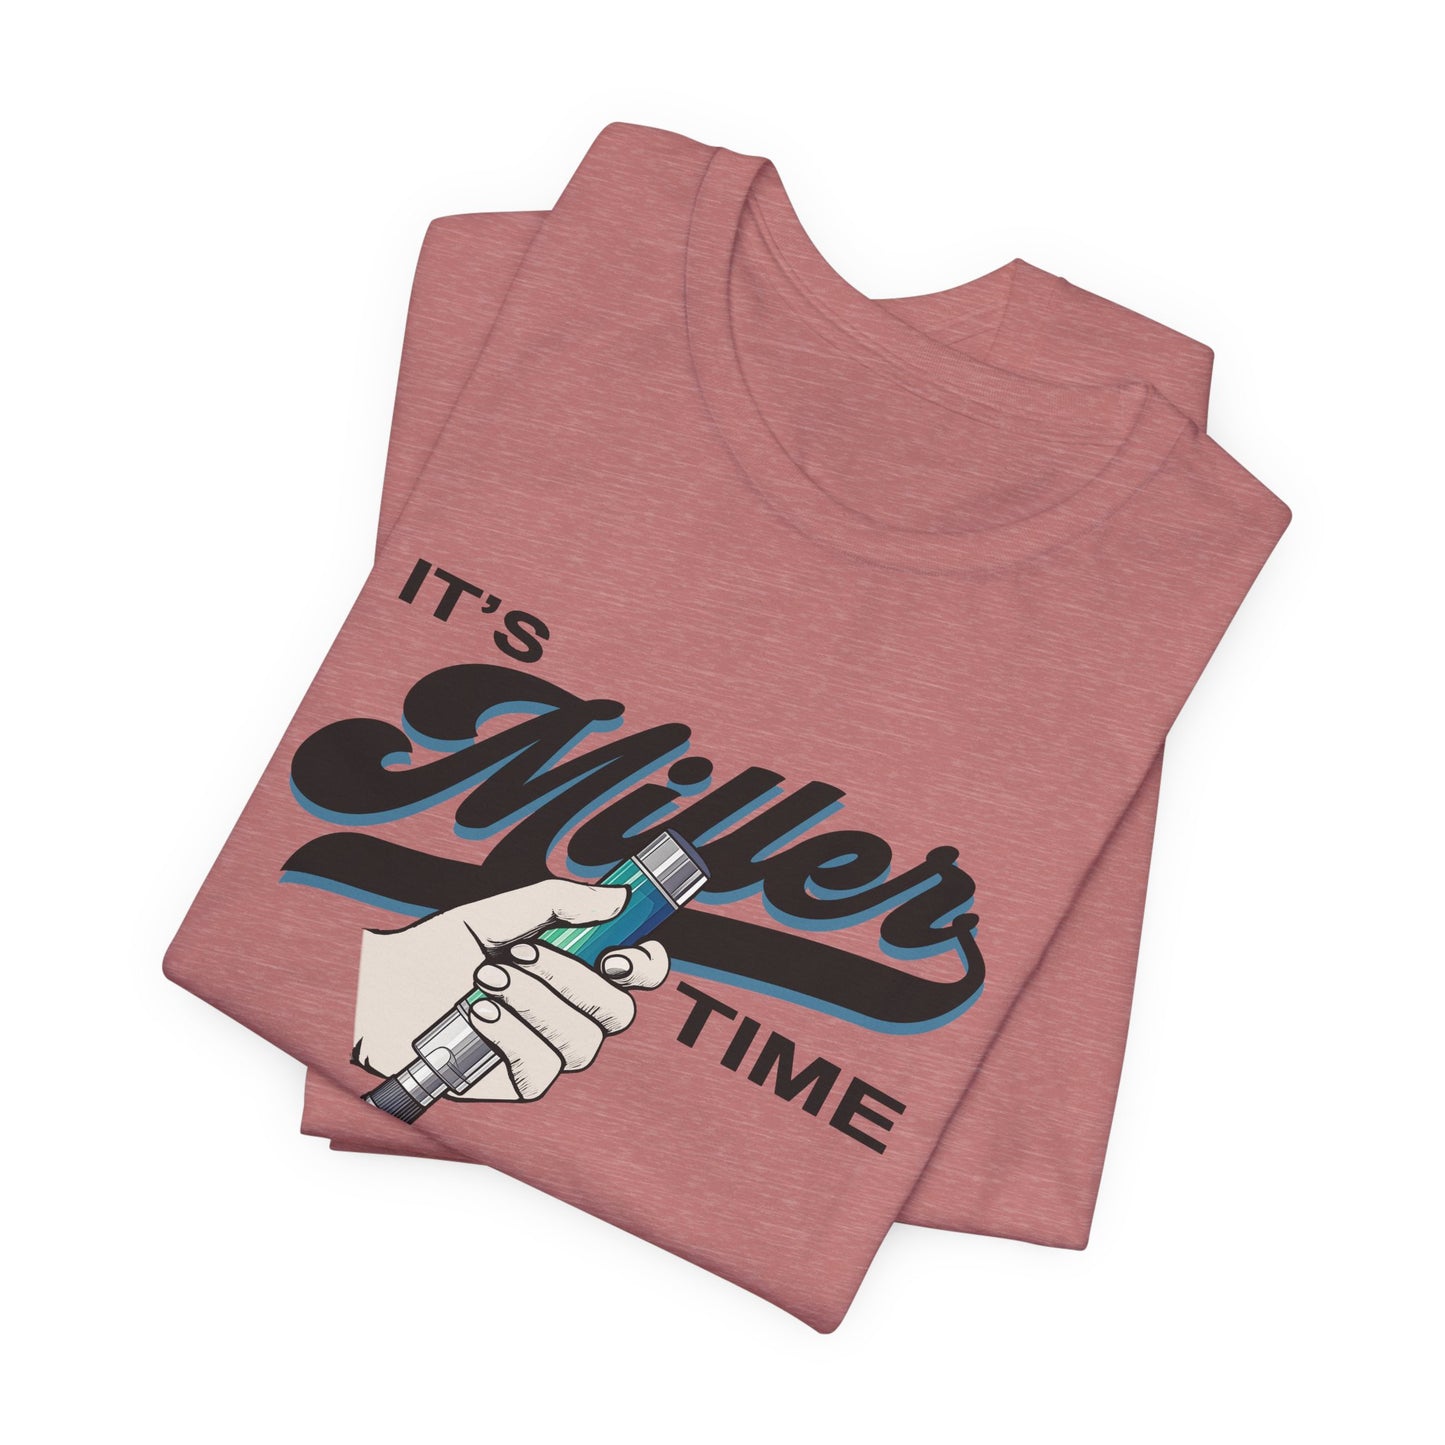 It's Miller Time T-Shirt